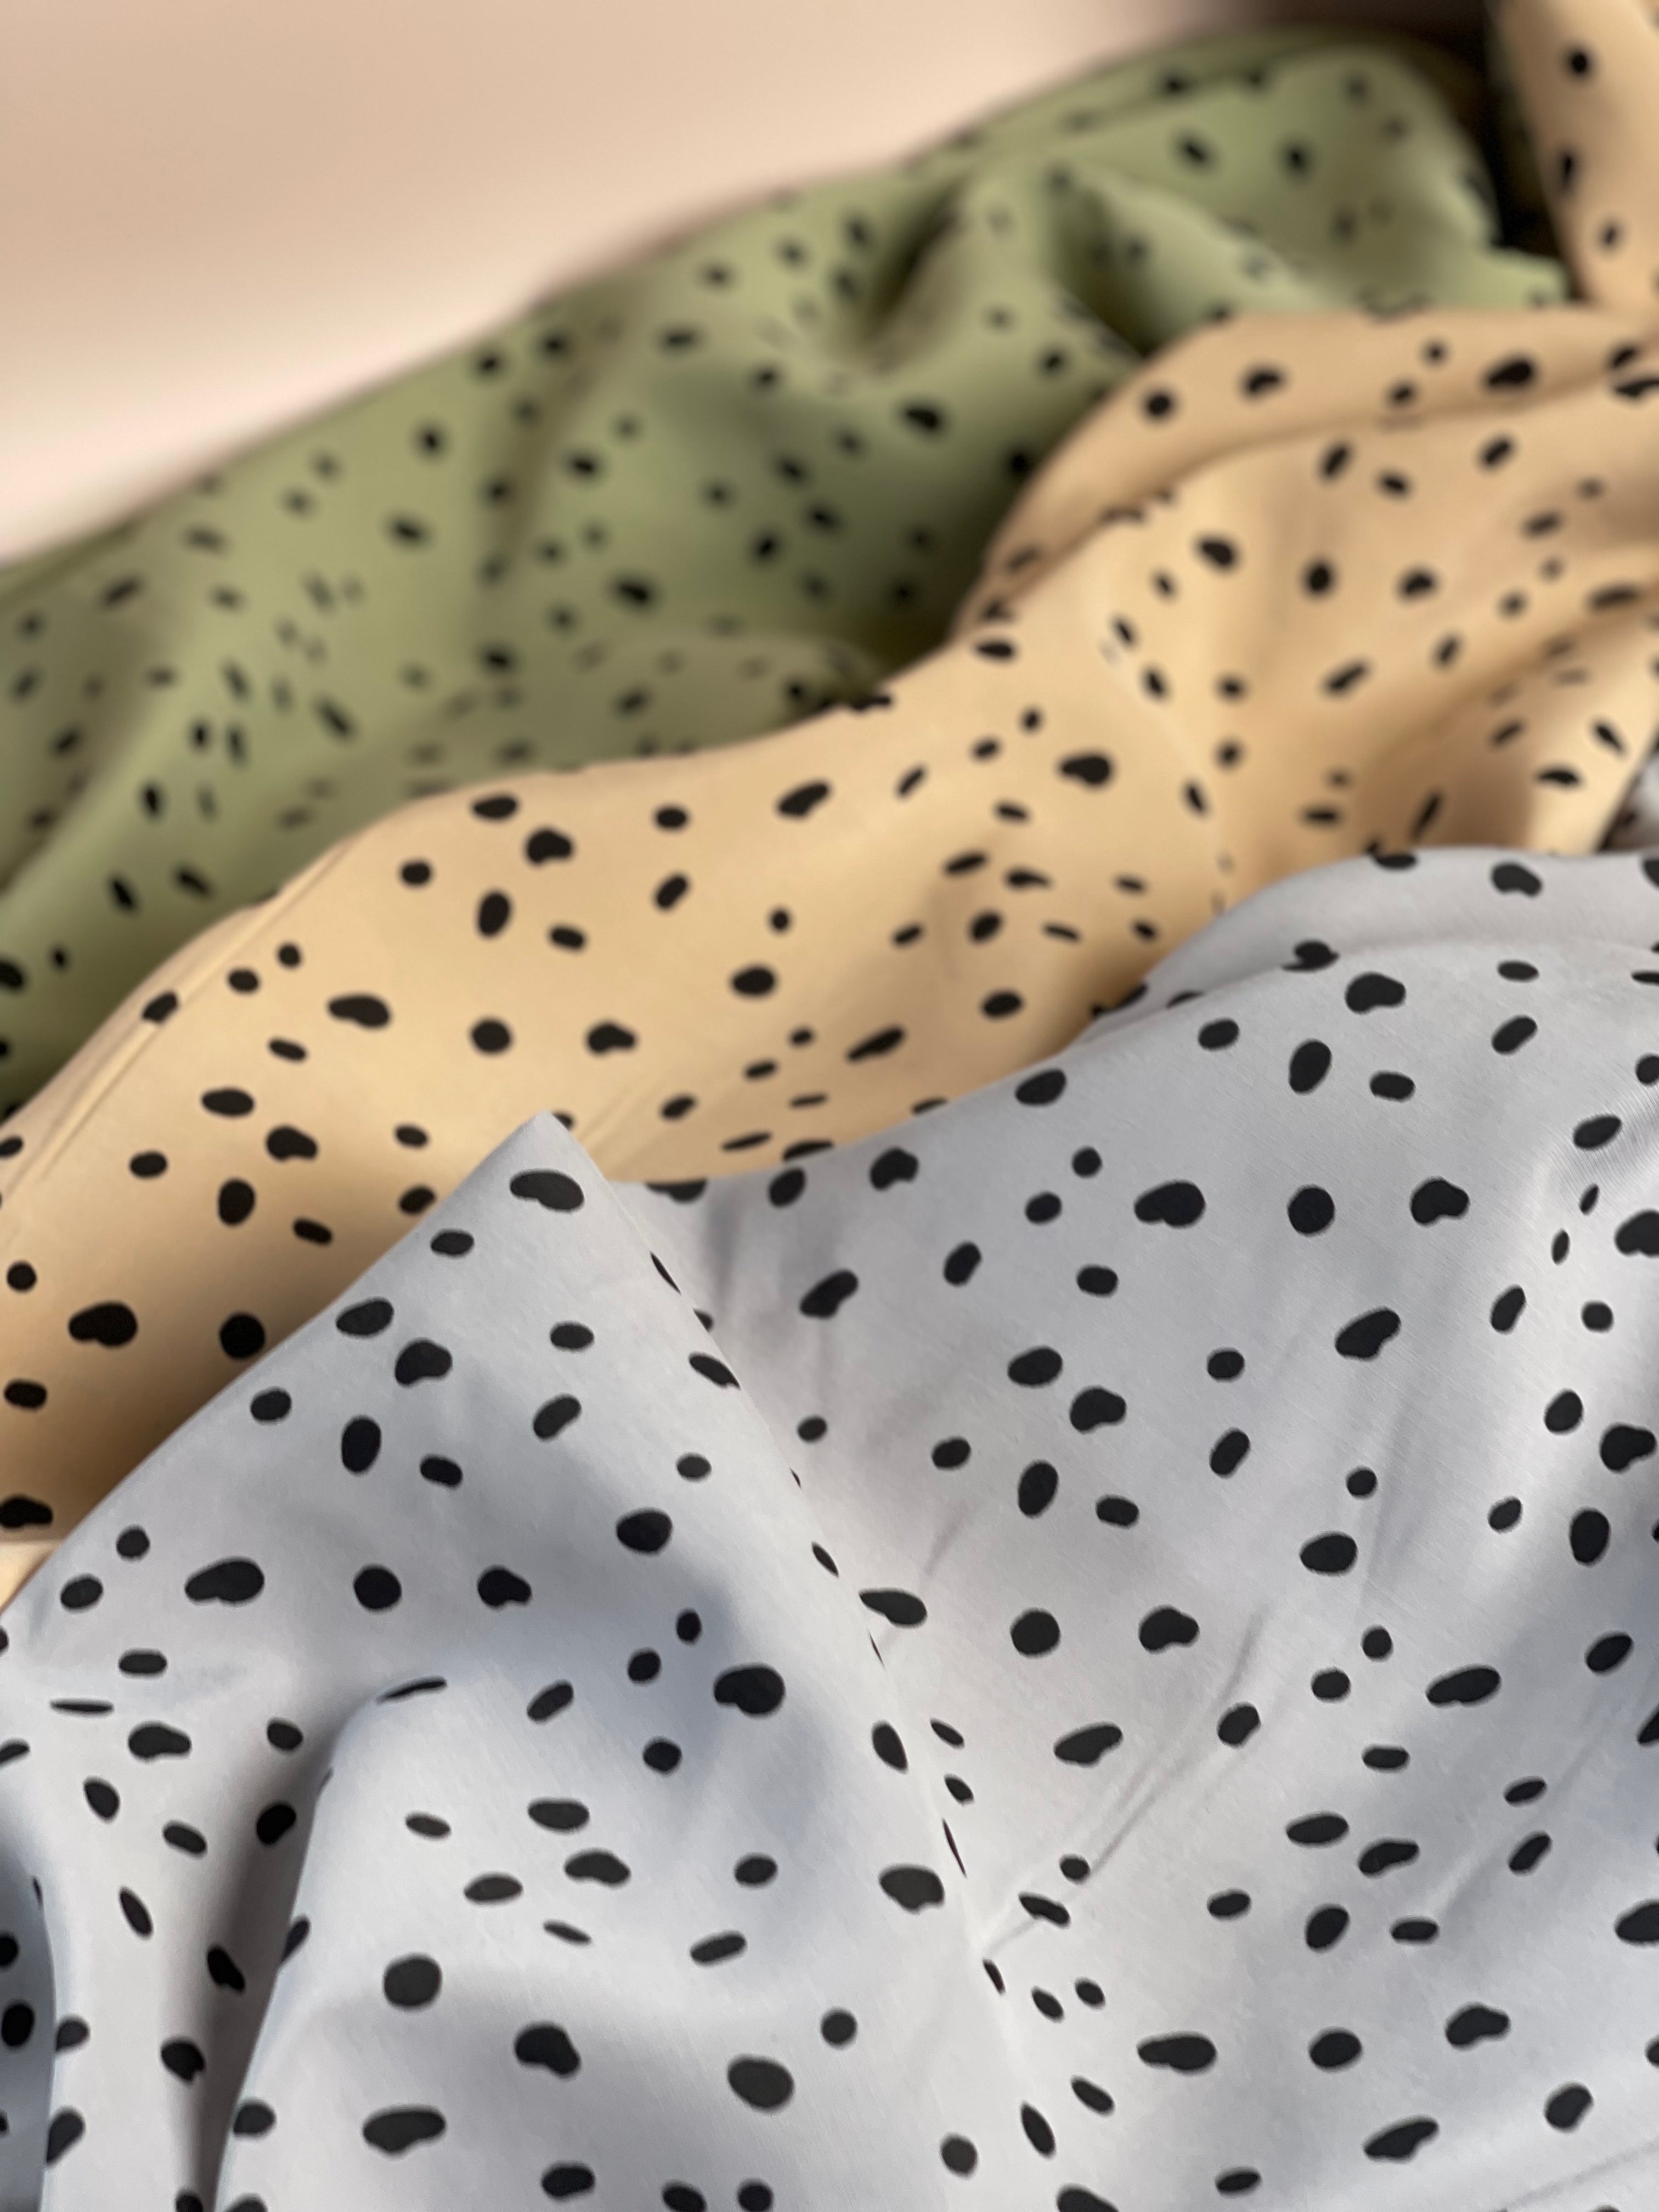 Irregular Dots Soft Peach Sandwashed Viscose Fabric